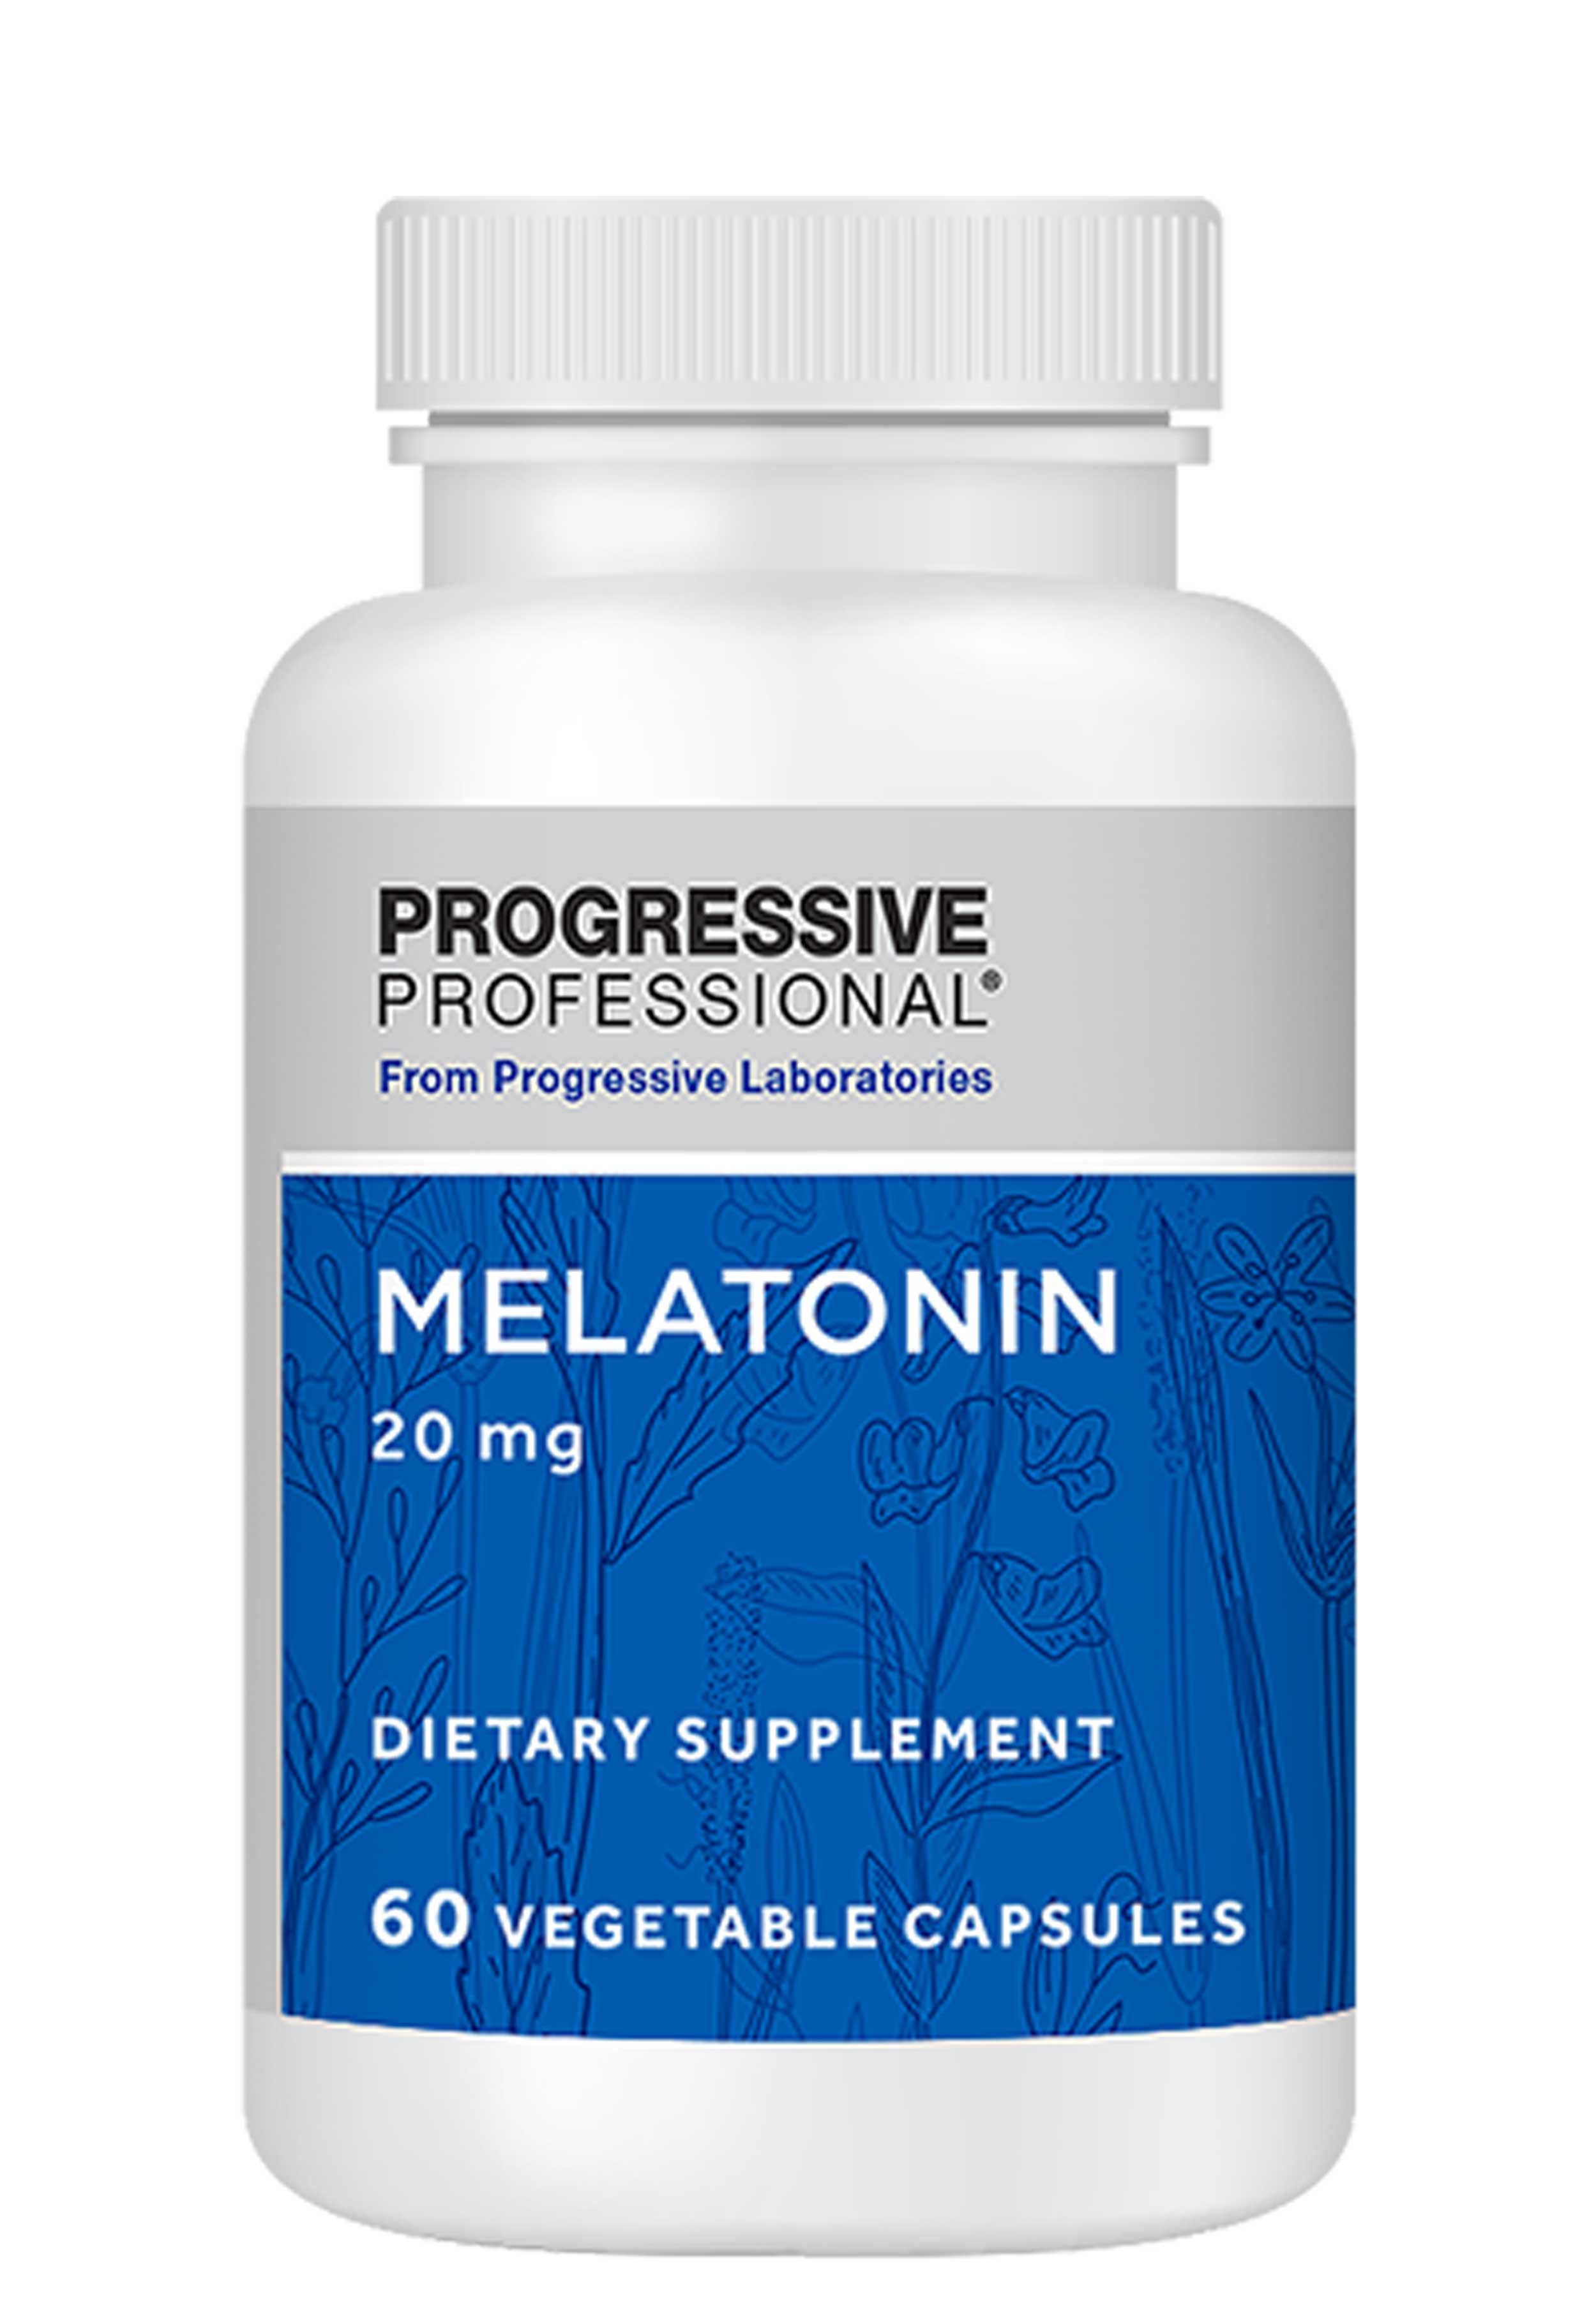 Progressive Laboratories Melatonin 20 mg